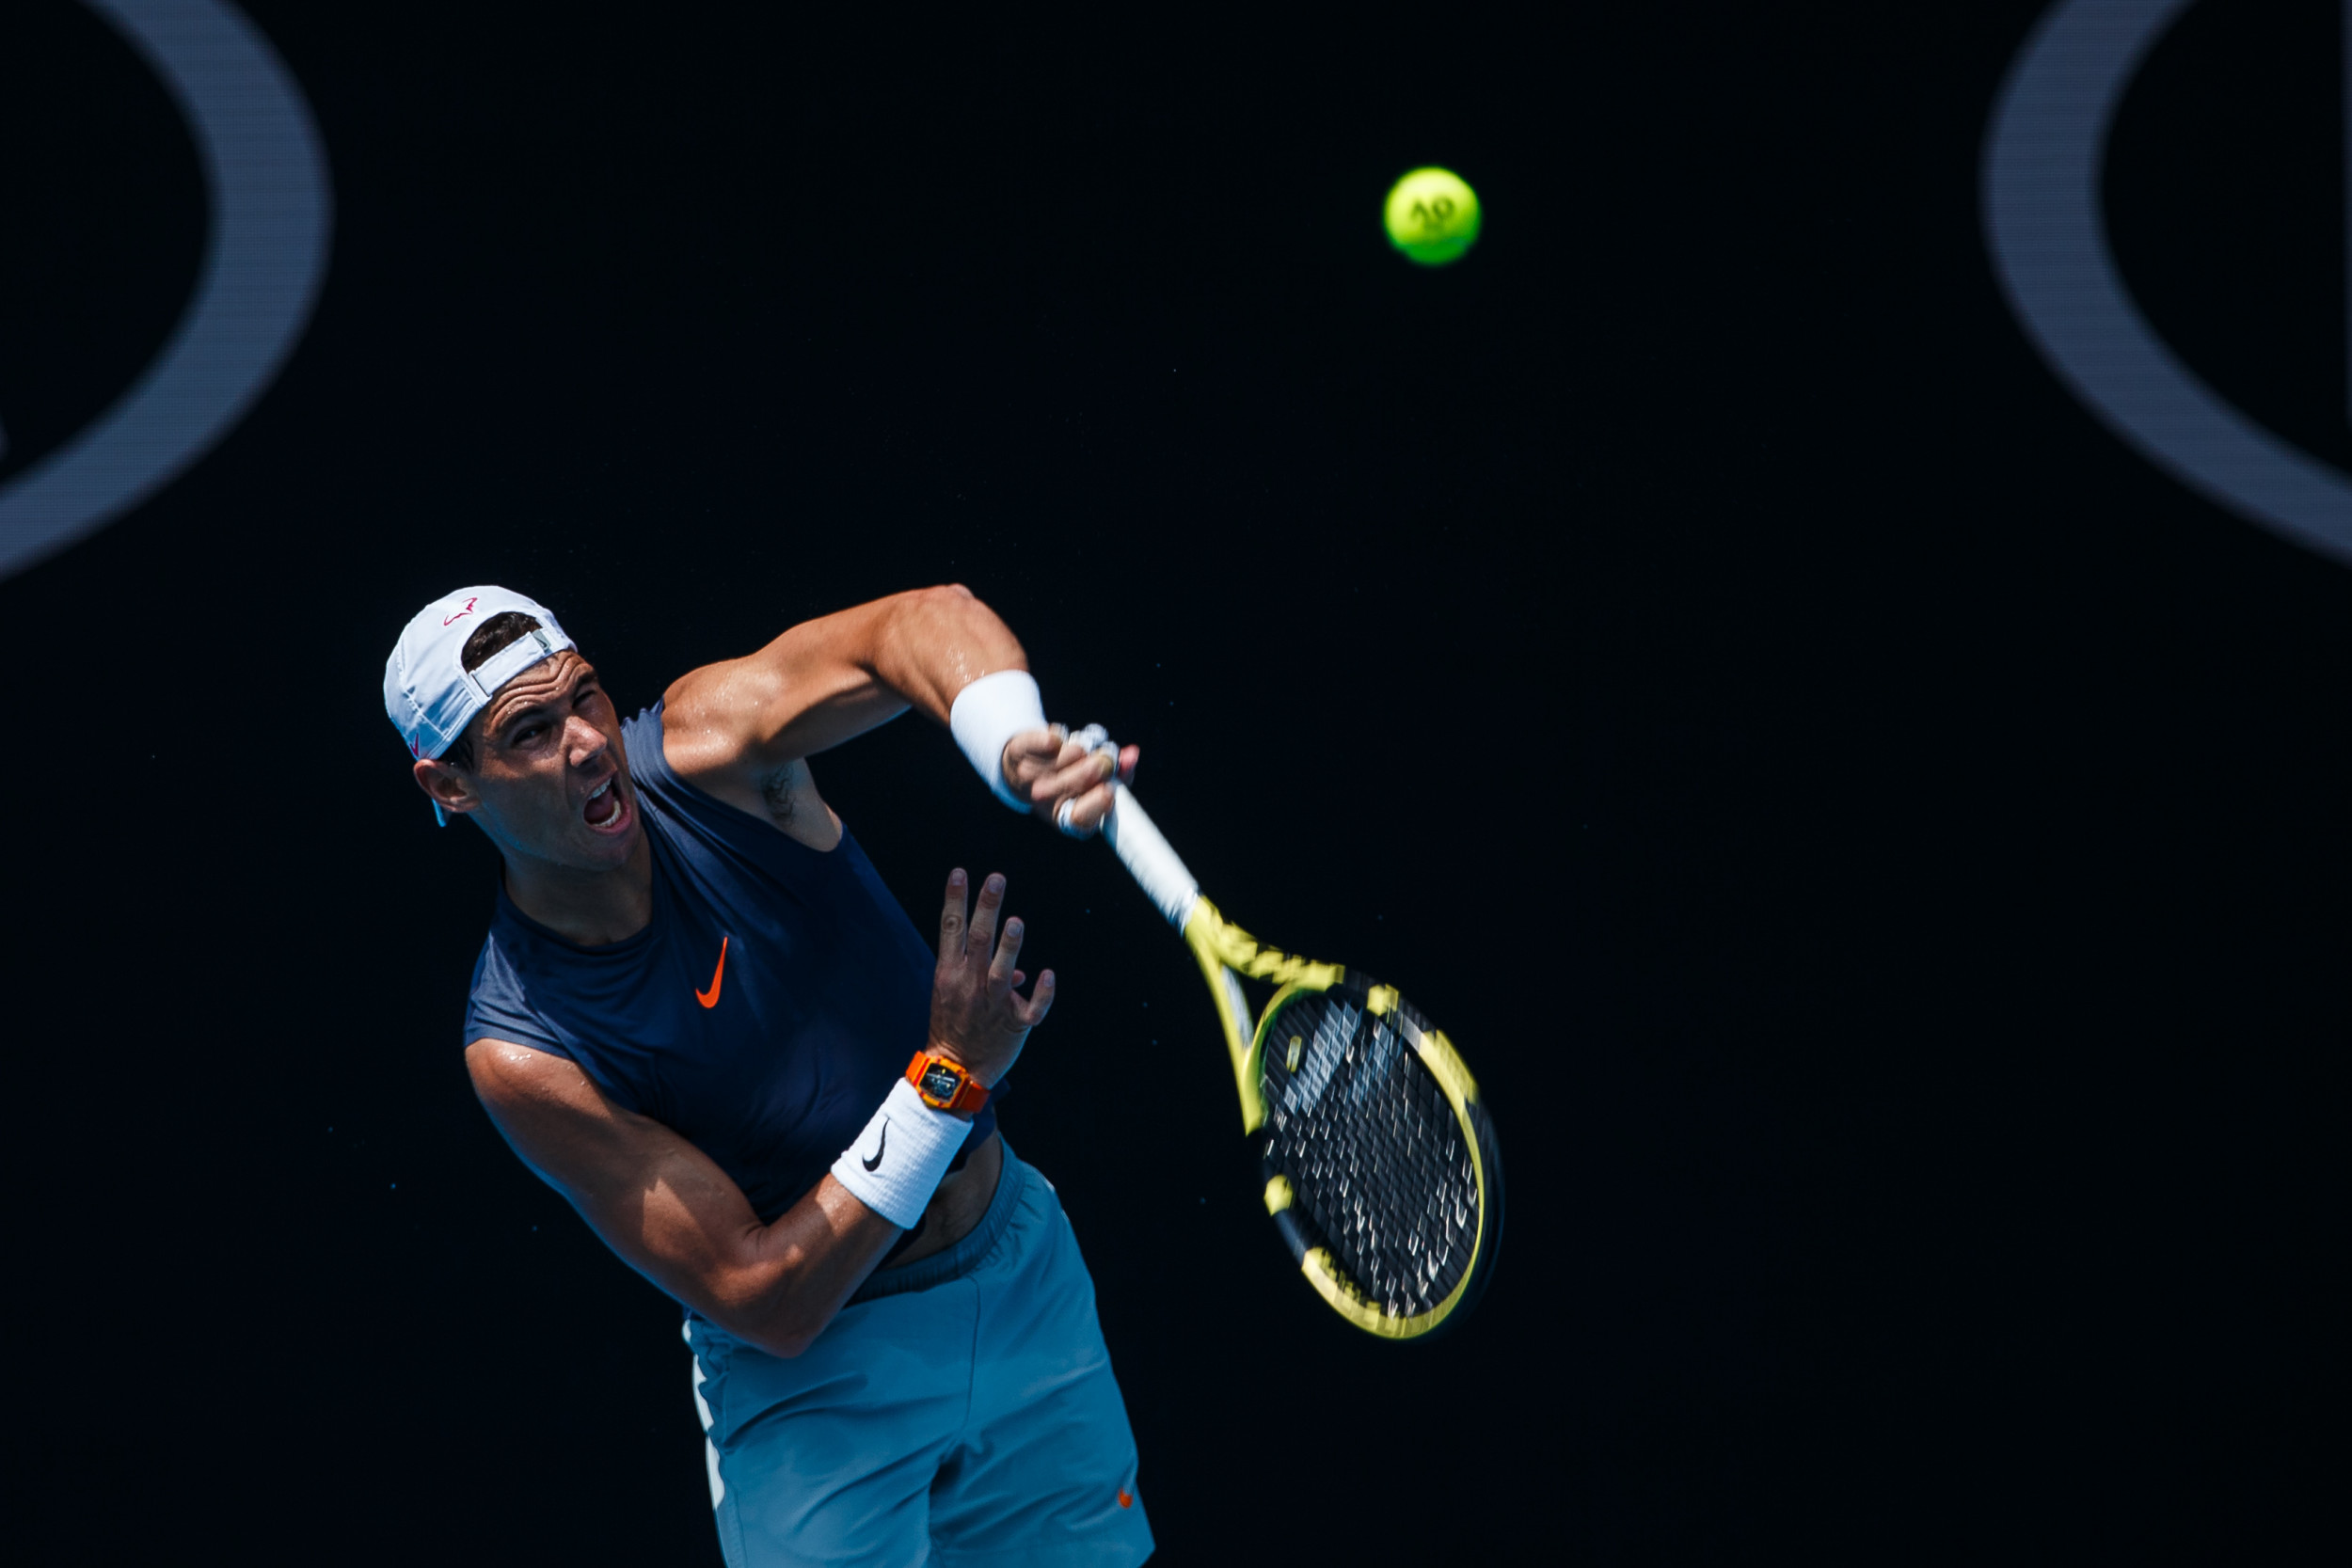 Australian Open 2020 Schedule: Where to Watch Nadal First Round Start Time, Live Stream